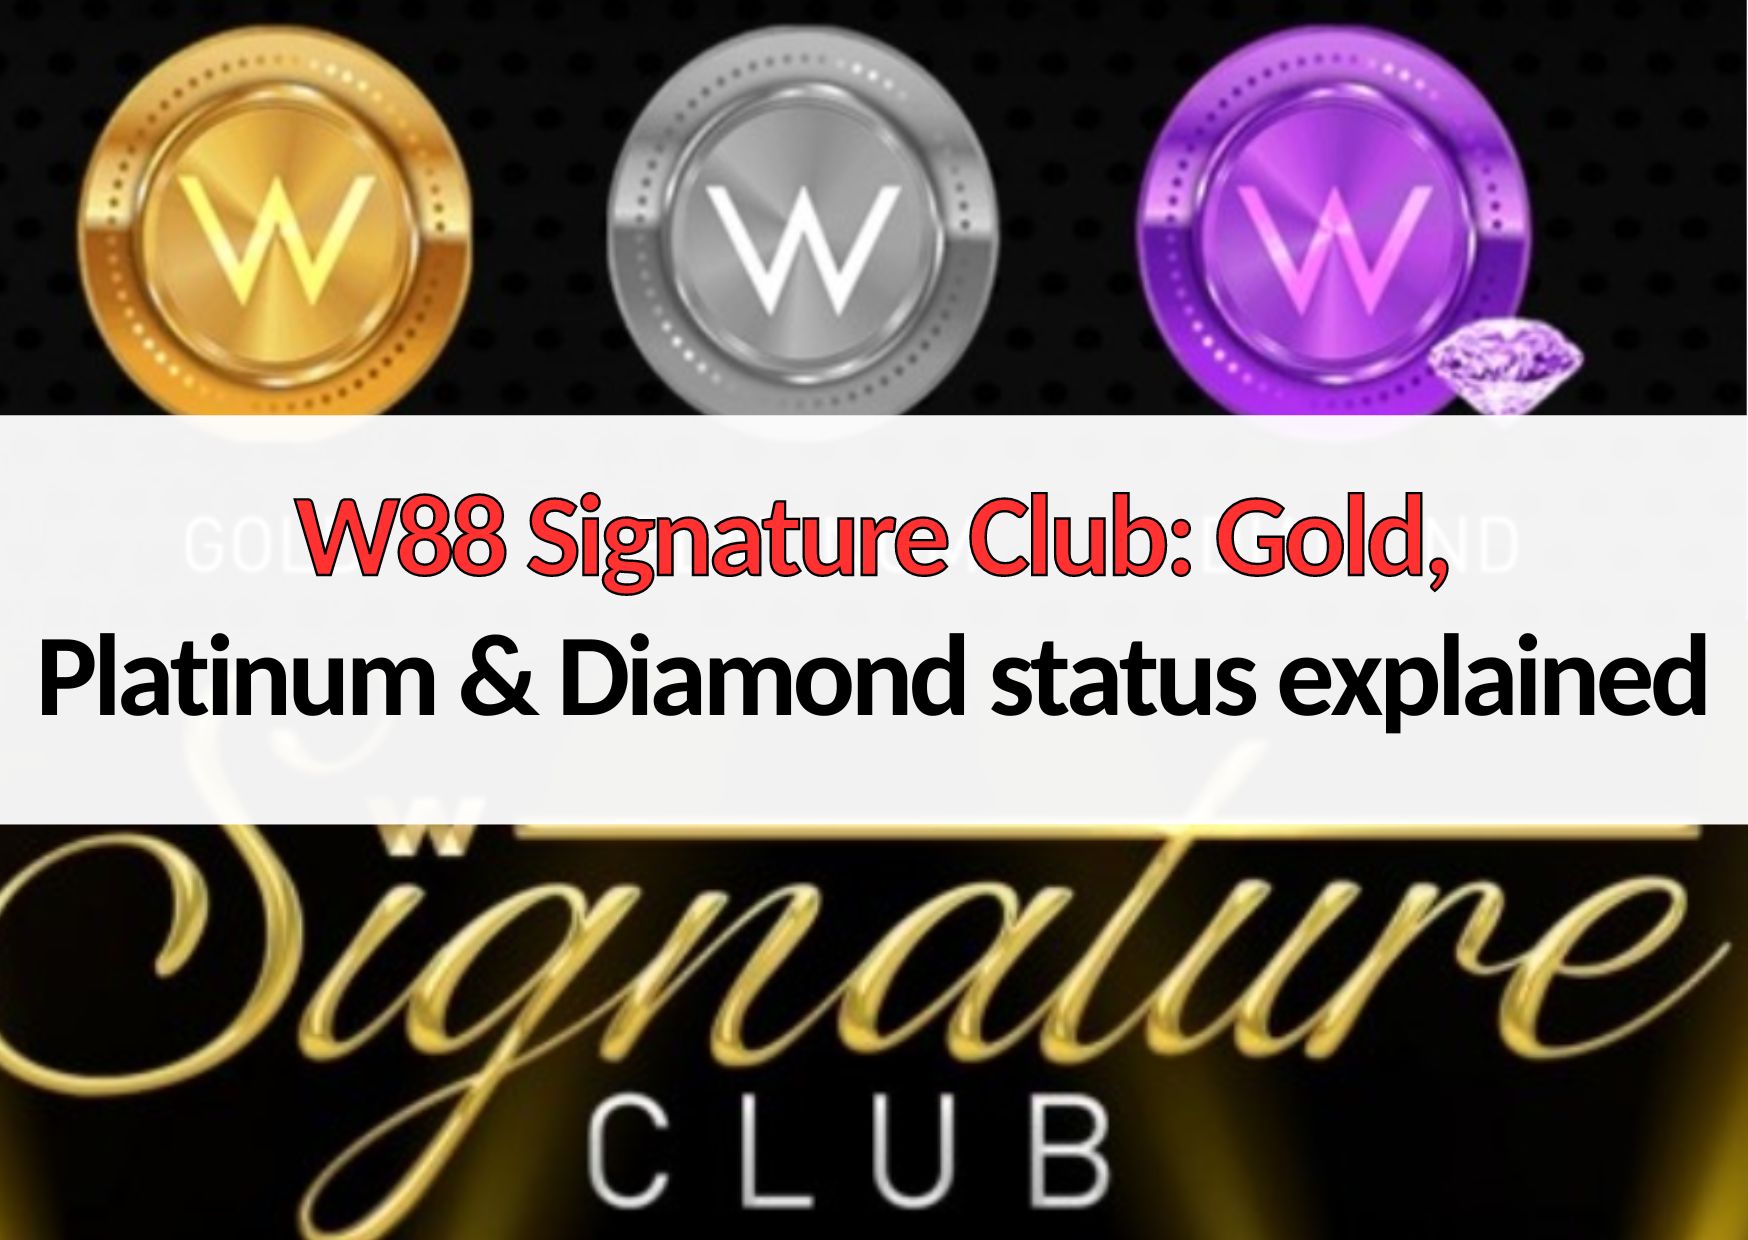 W88you w88 signature club membership details explained